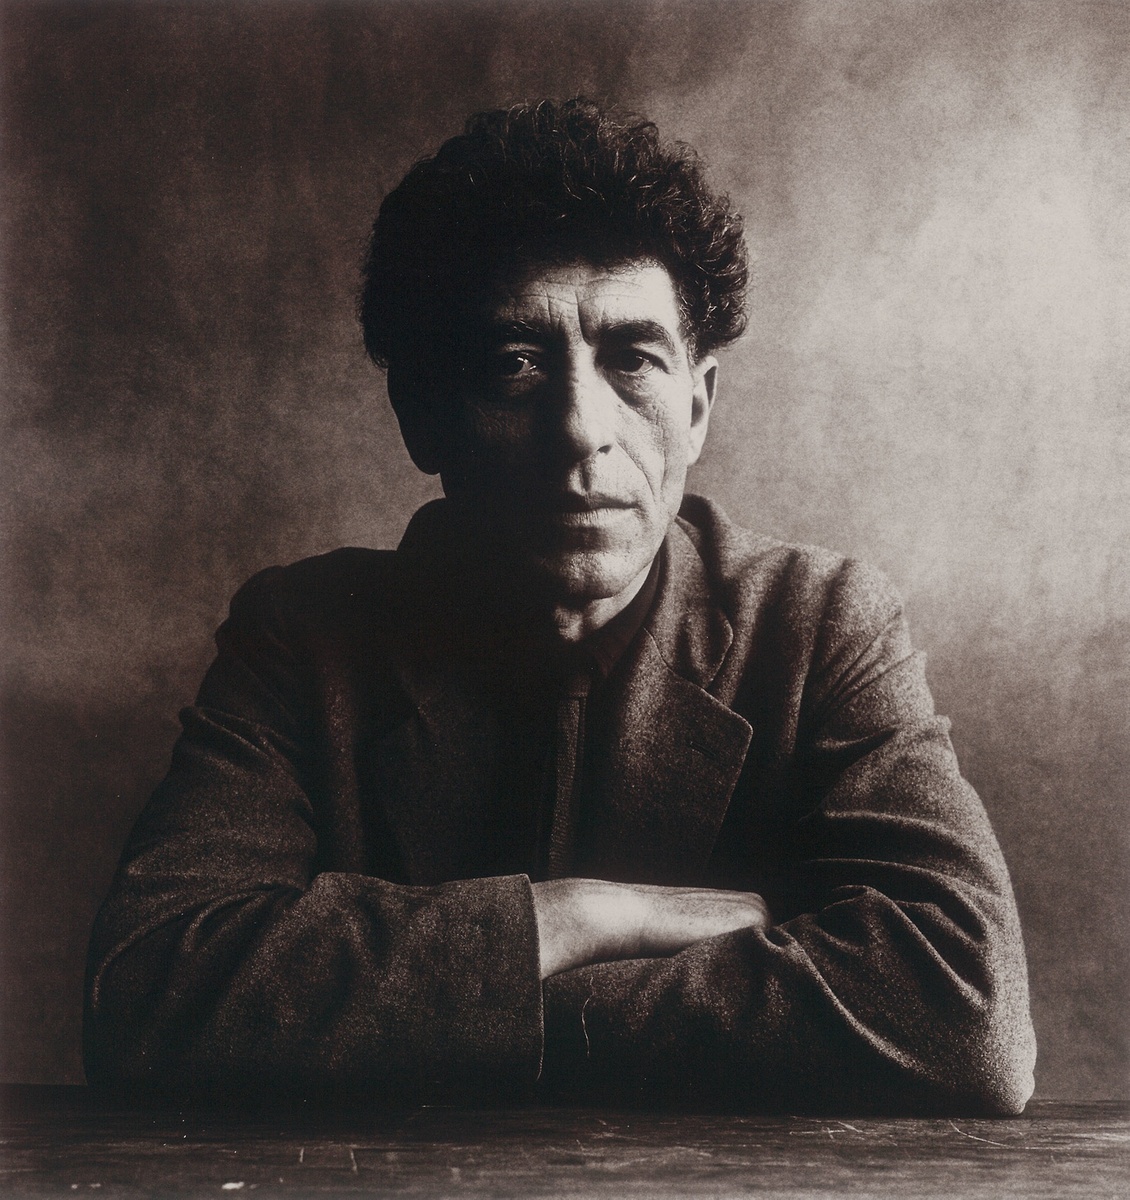 Irving Penn, Alberto Giacometti, Paris, 1950 #artinstituteofchicago #irvingpenn artic.edu/artworks/94523/